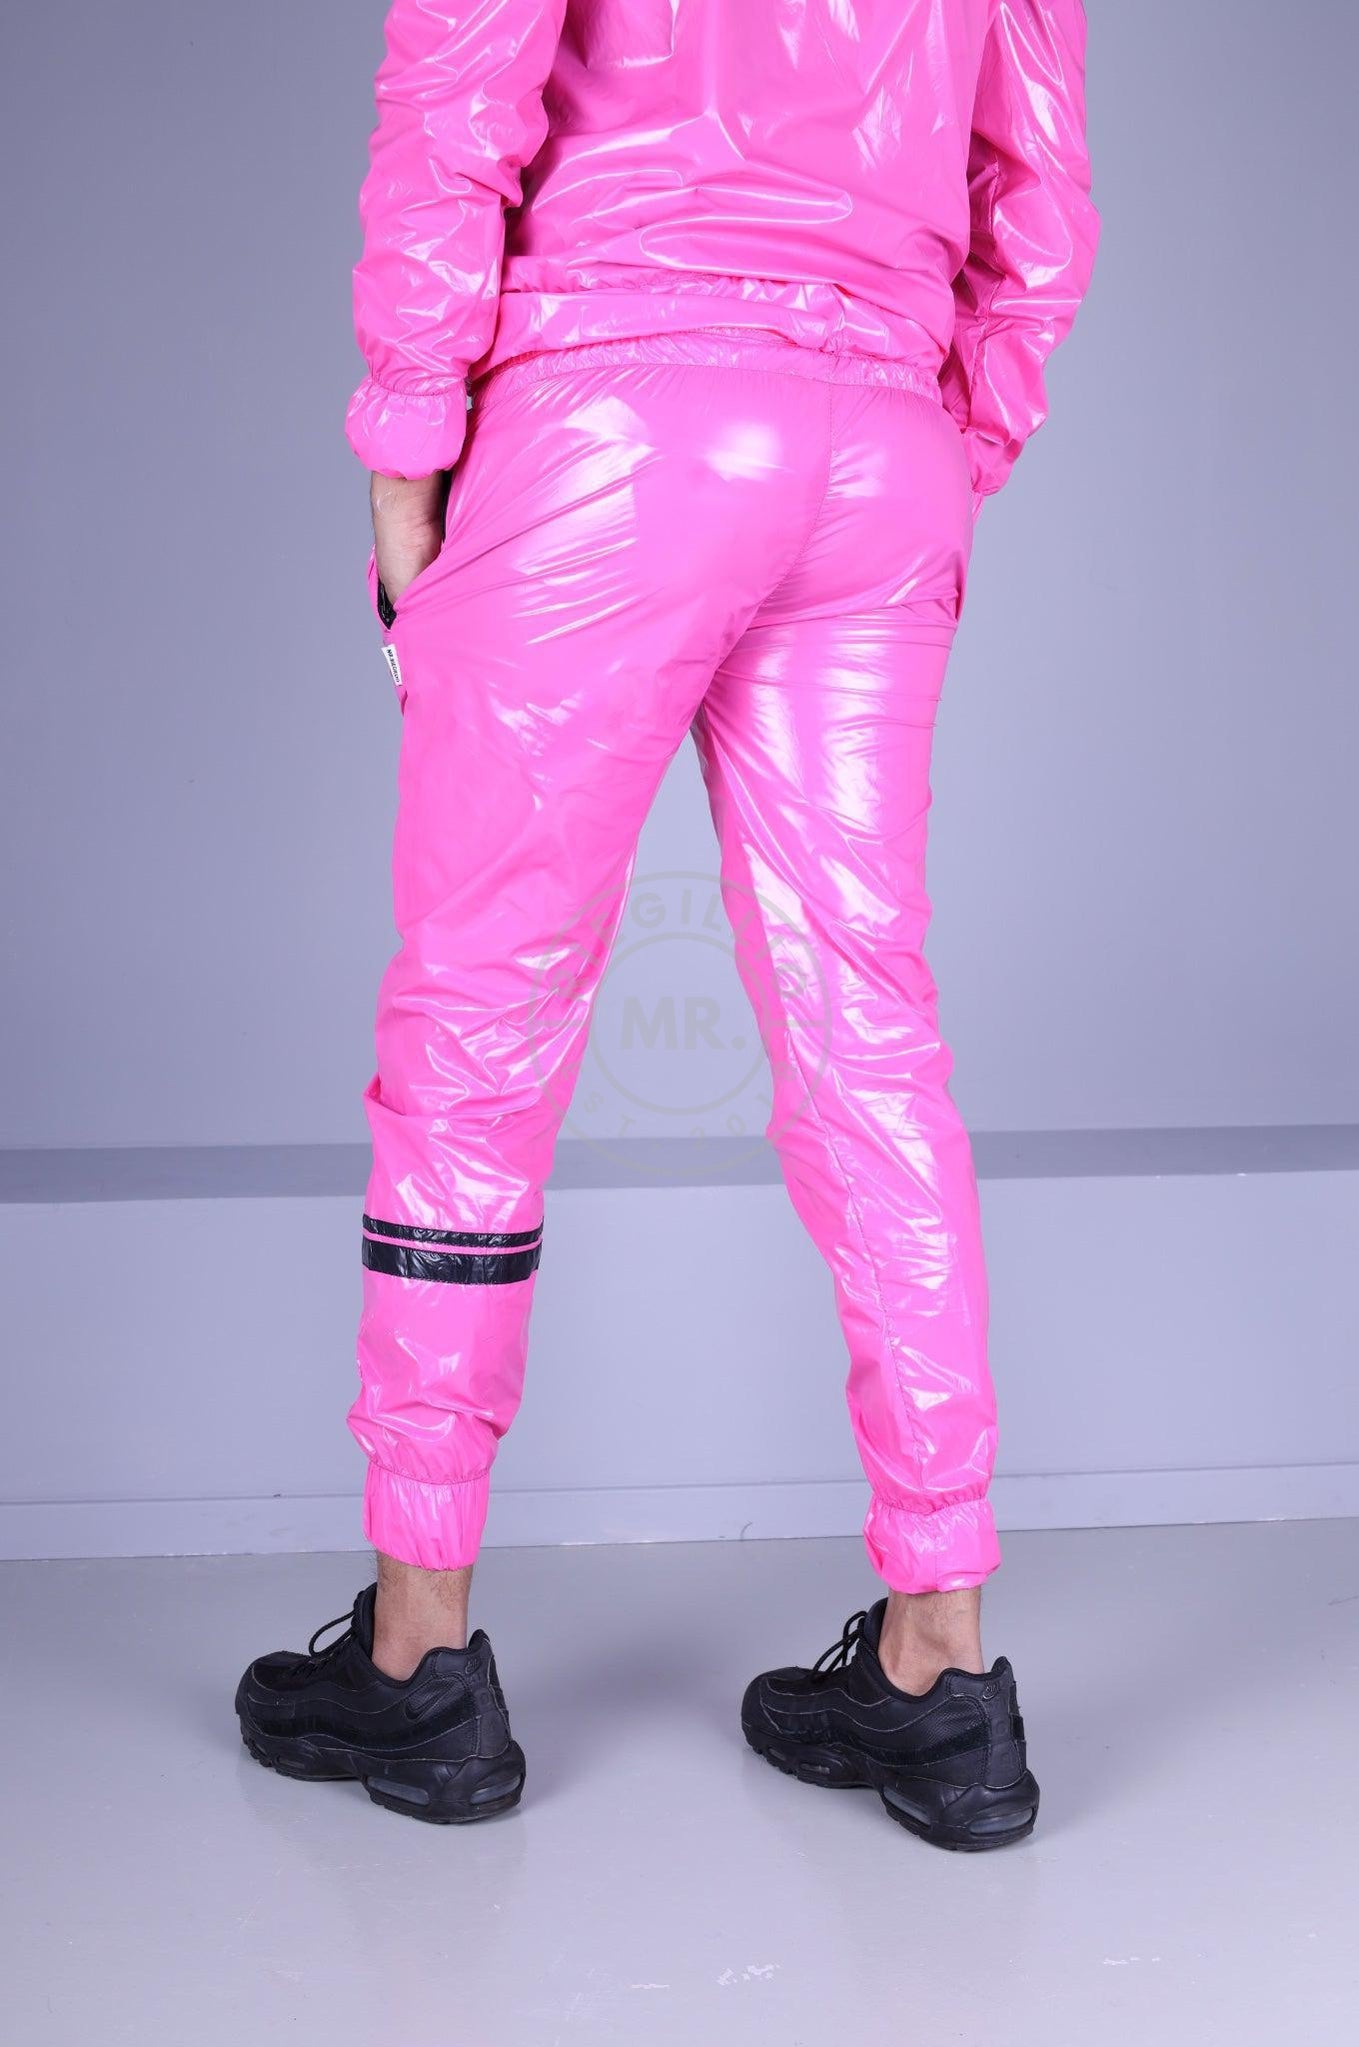 Shiny Nylon Tracksuit Pants - Pink at MR. Riegillio